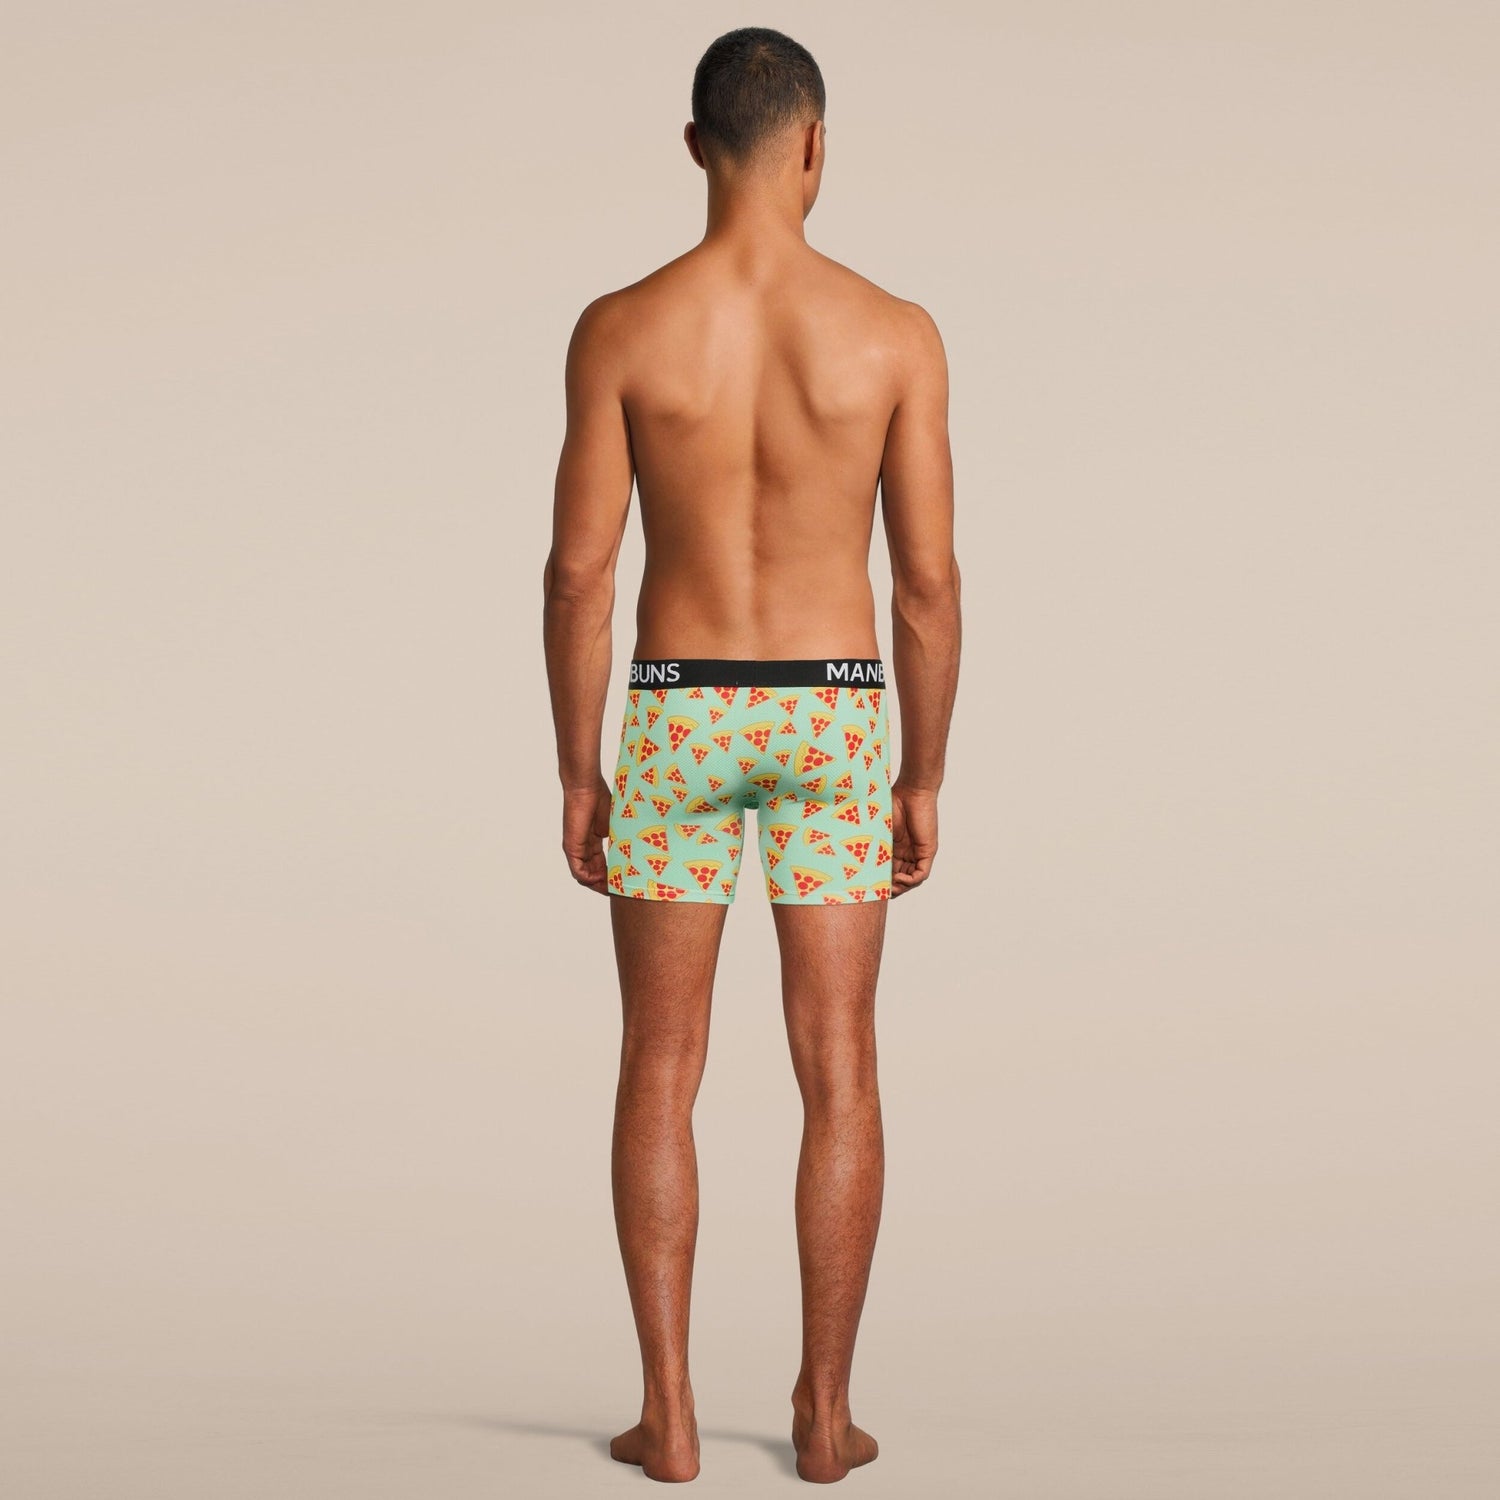 Men's Pizza Boxer Brief Underwear - MANBUNS Underwear & Socks Free Shipping